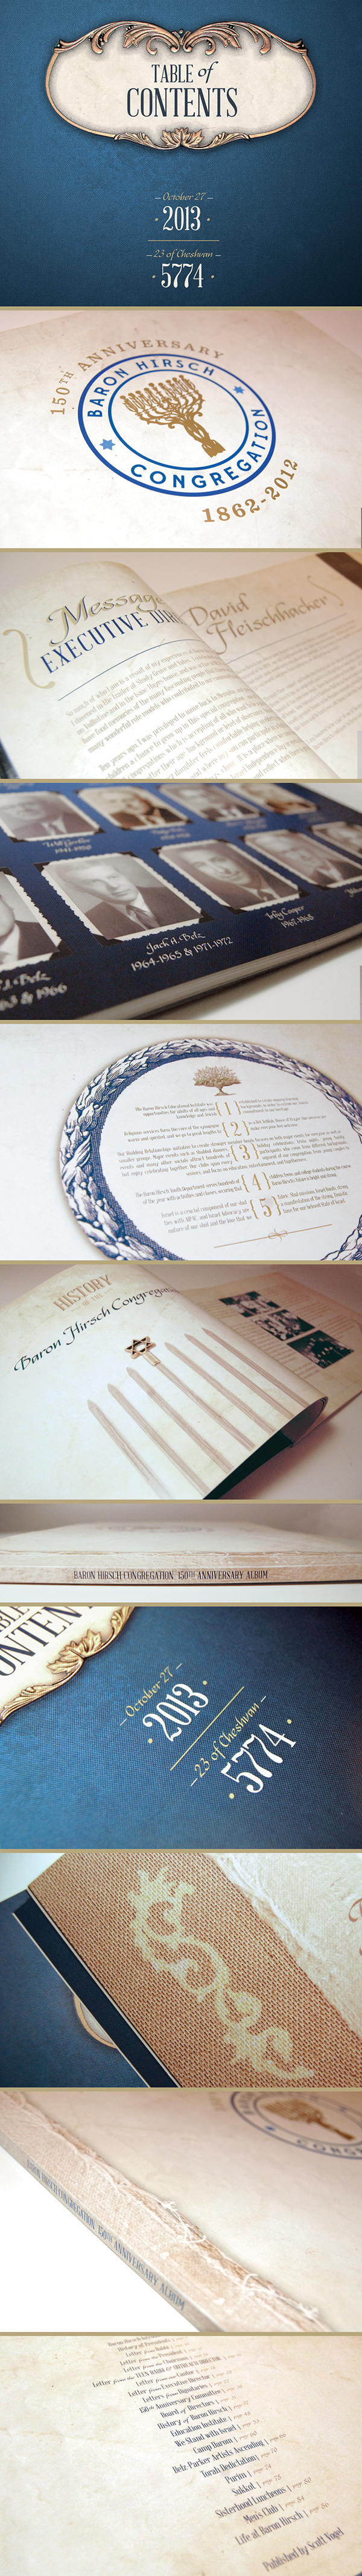 santana singleton Baron Hirsch Synagogue design for religion book design historic anniversity book